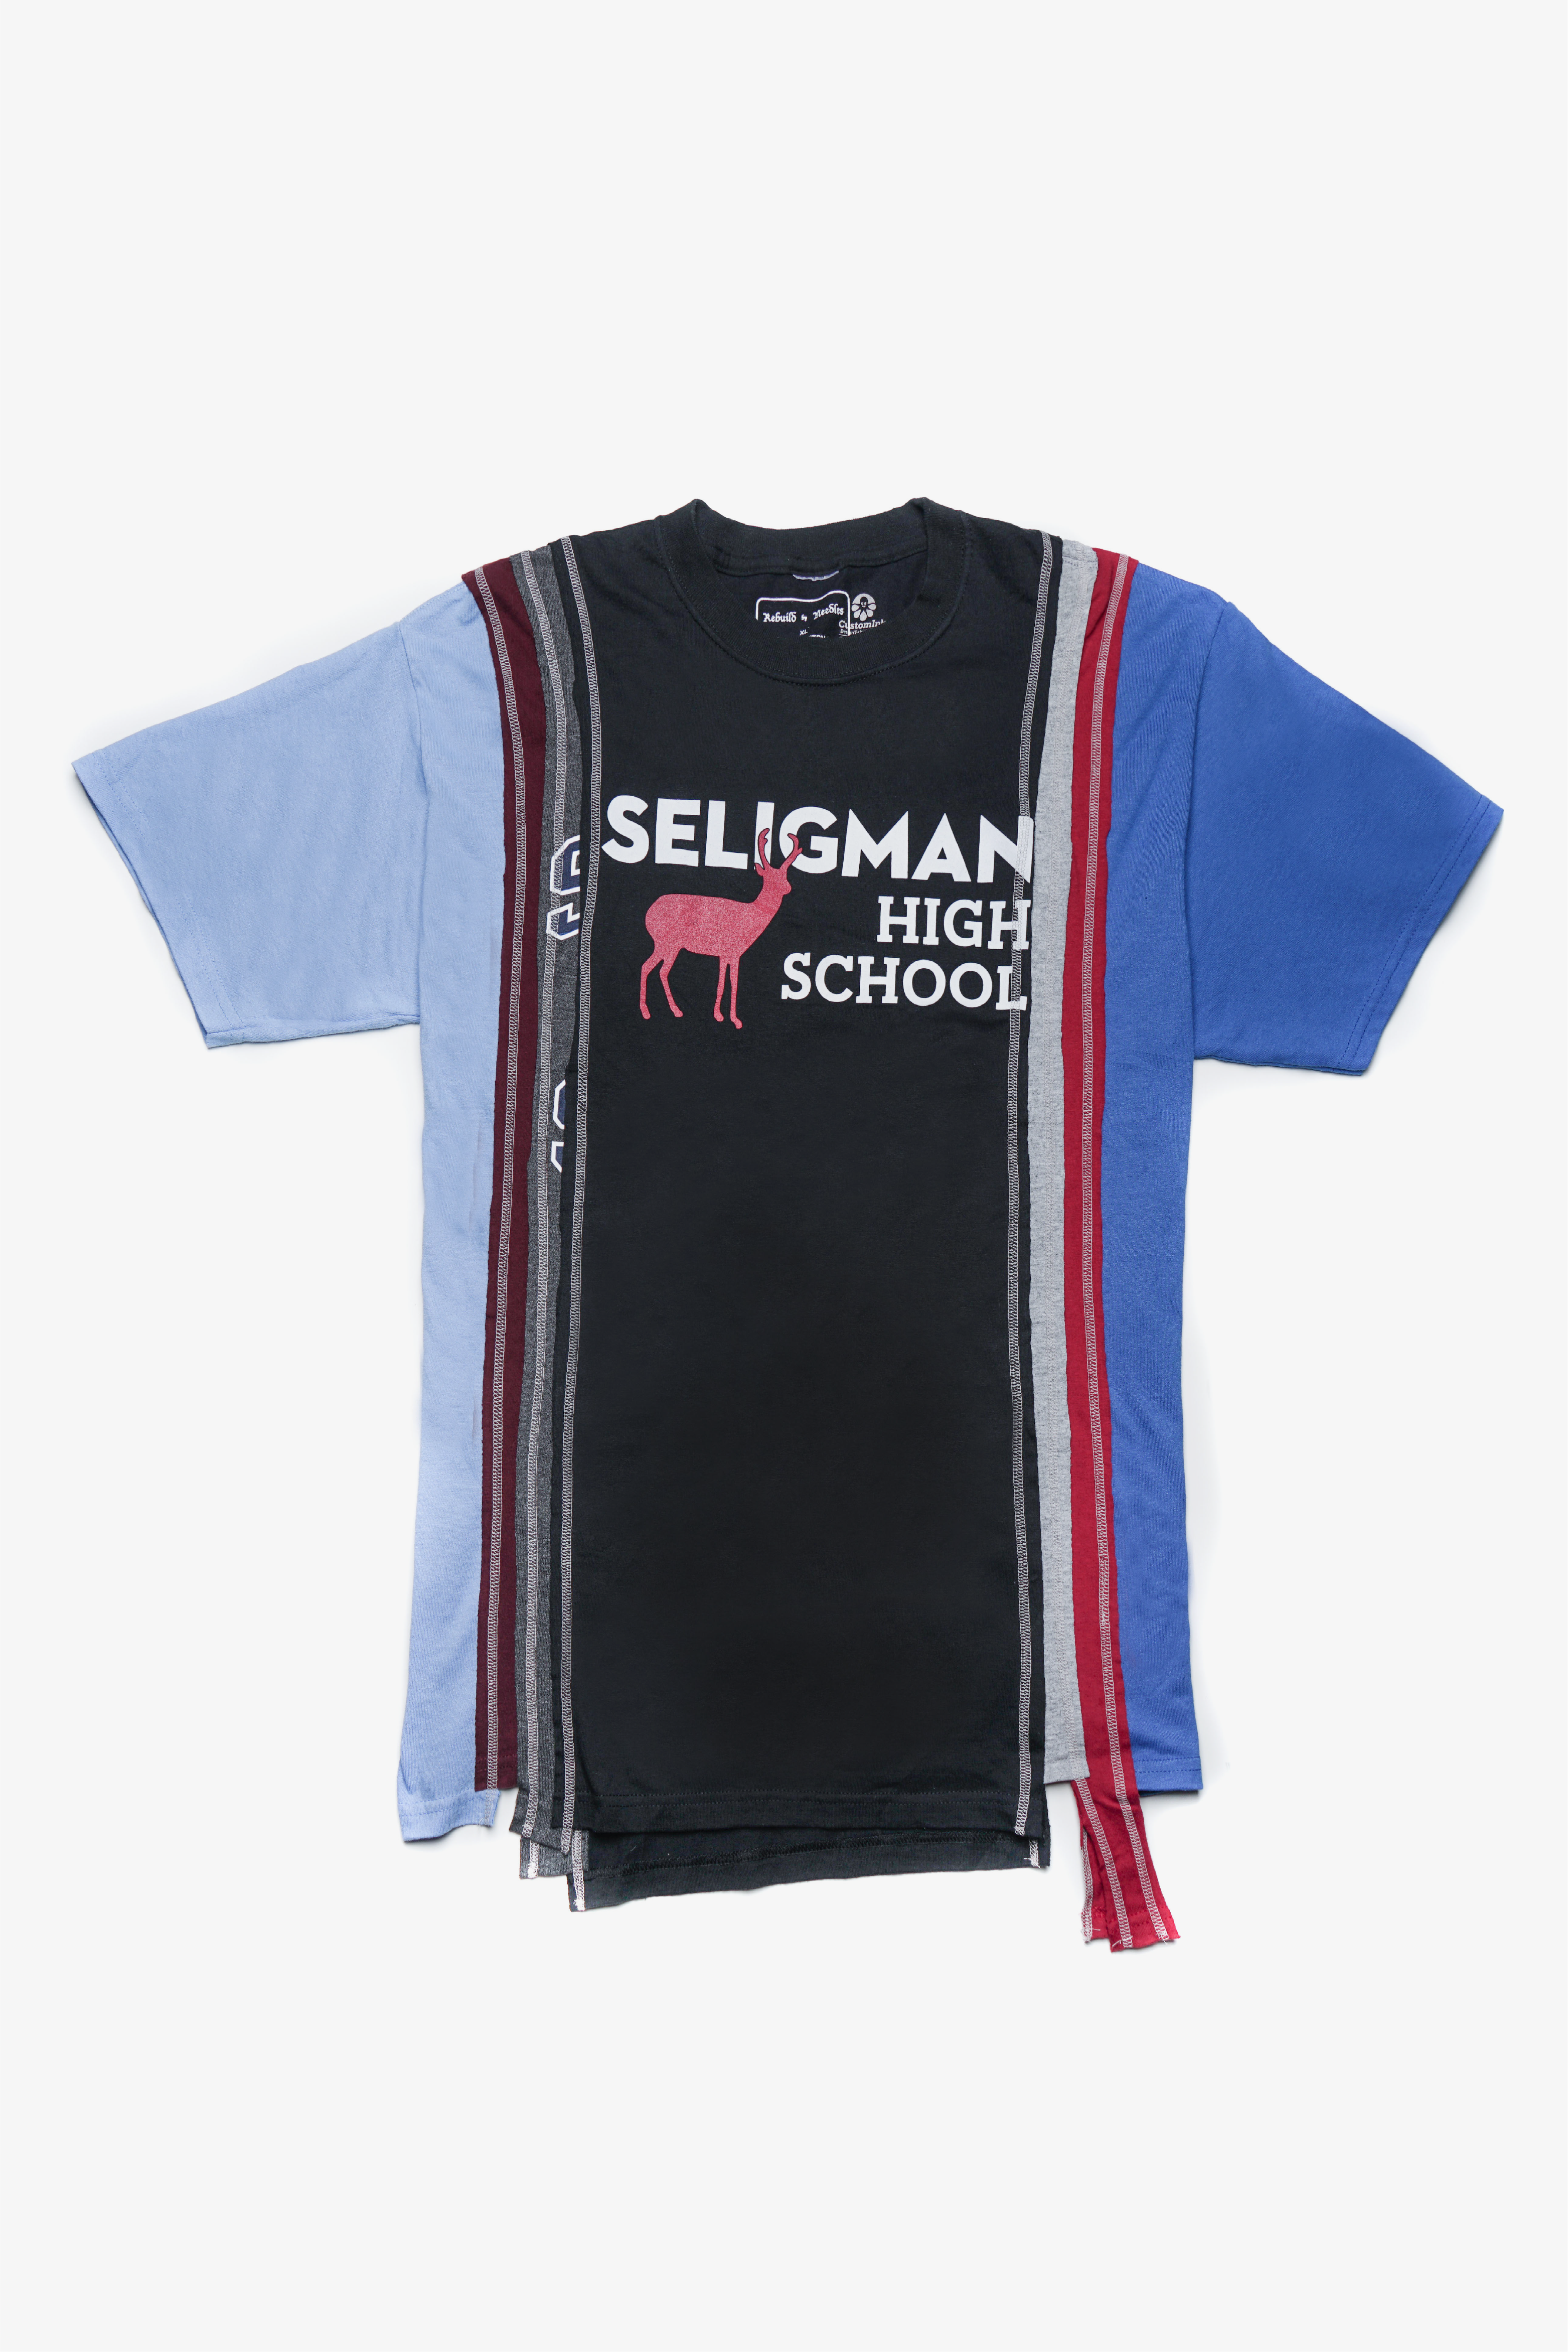 Selectshop FRAME - NEEDLES 7 Cuts College Tee - XL(B) T-Shirts Dubai